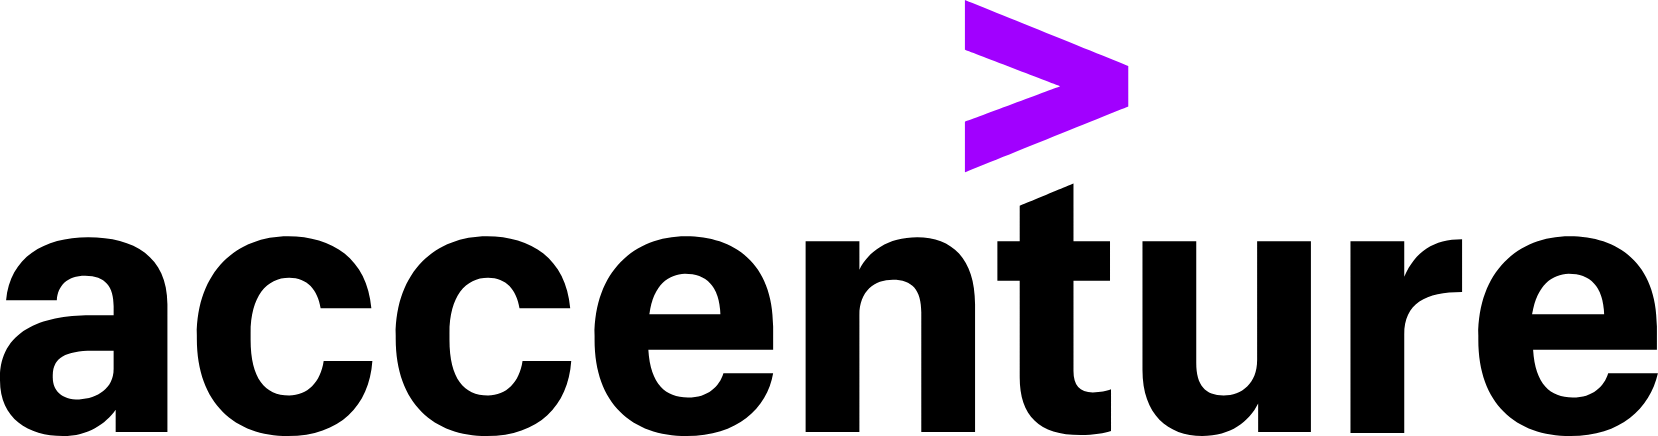 Accenture logo large (transparent PNG)